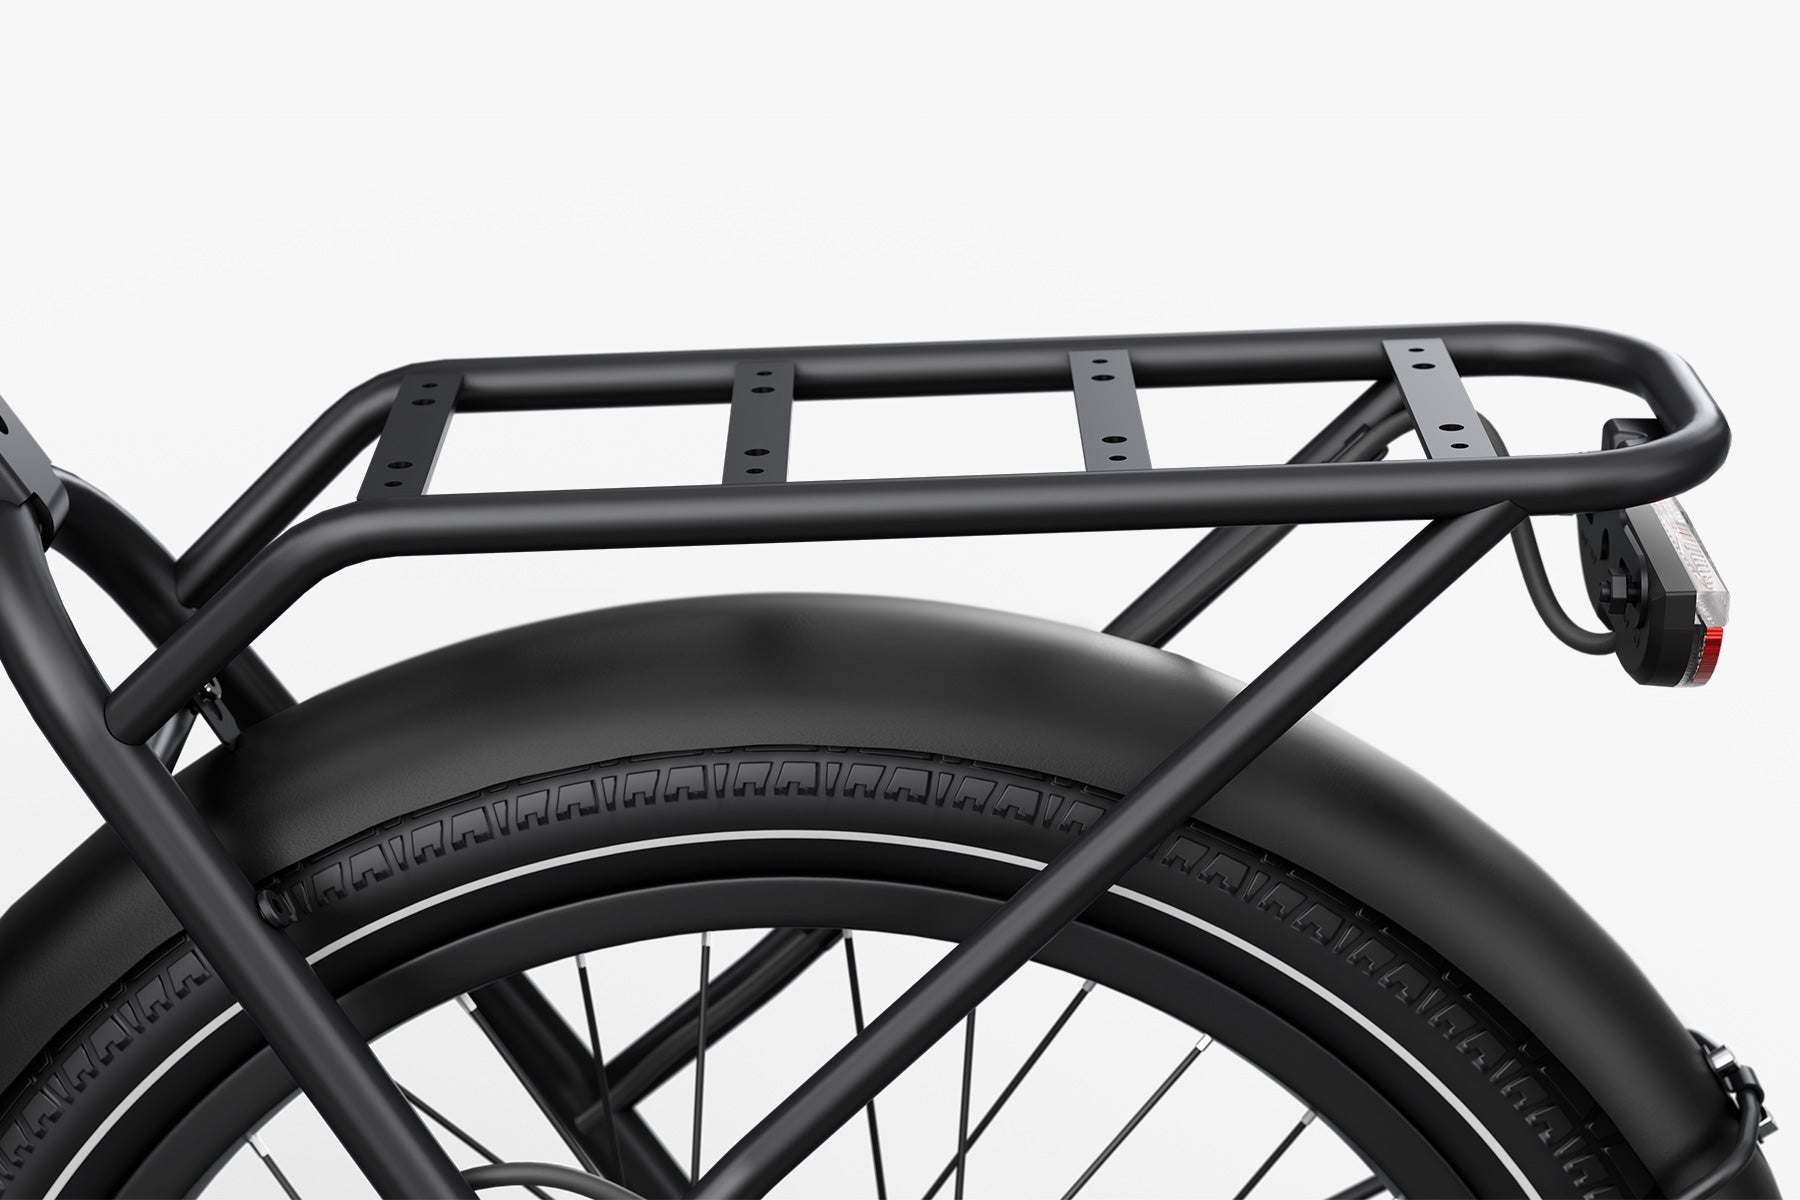 Versatile Foldable E-Bike to Meet All Your Needs